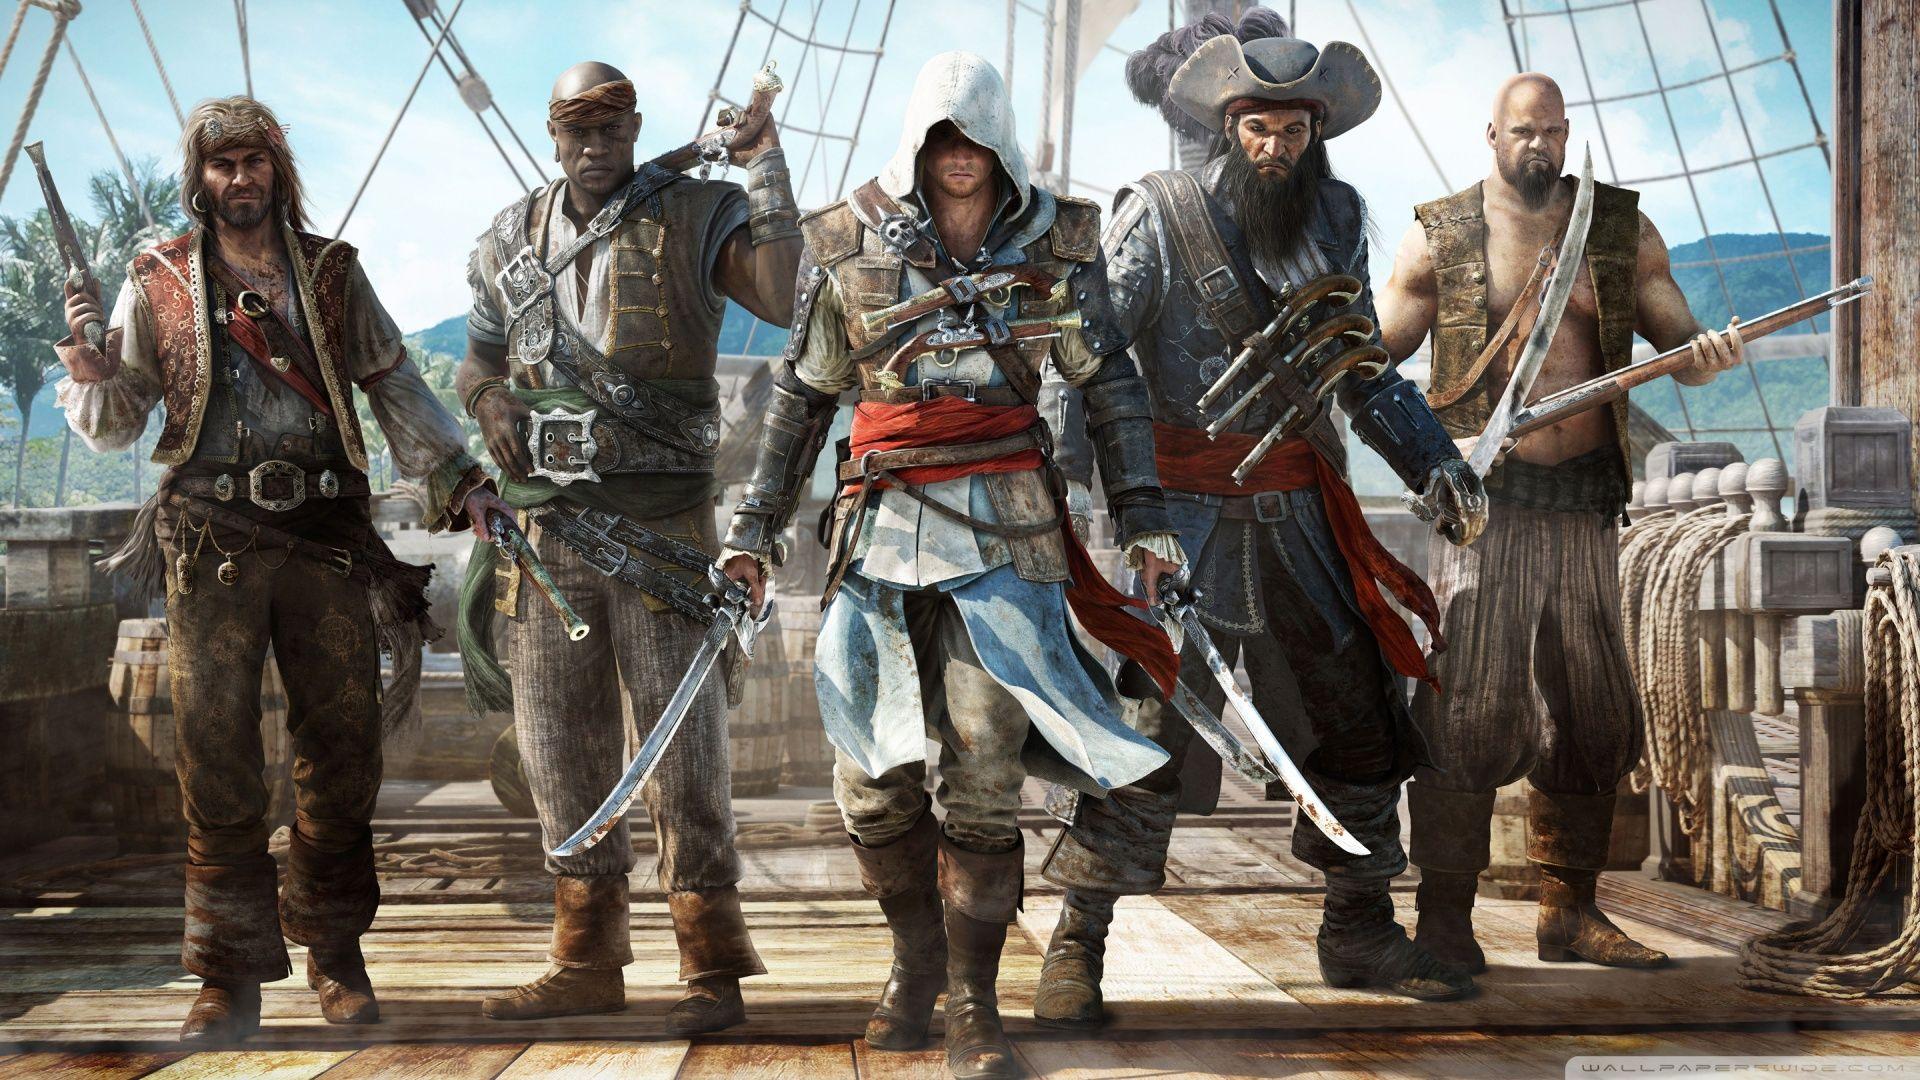 Assassins Creed IV Black Flag HD desktop wallpaper, High